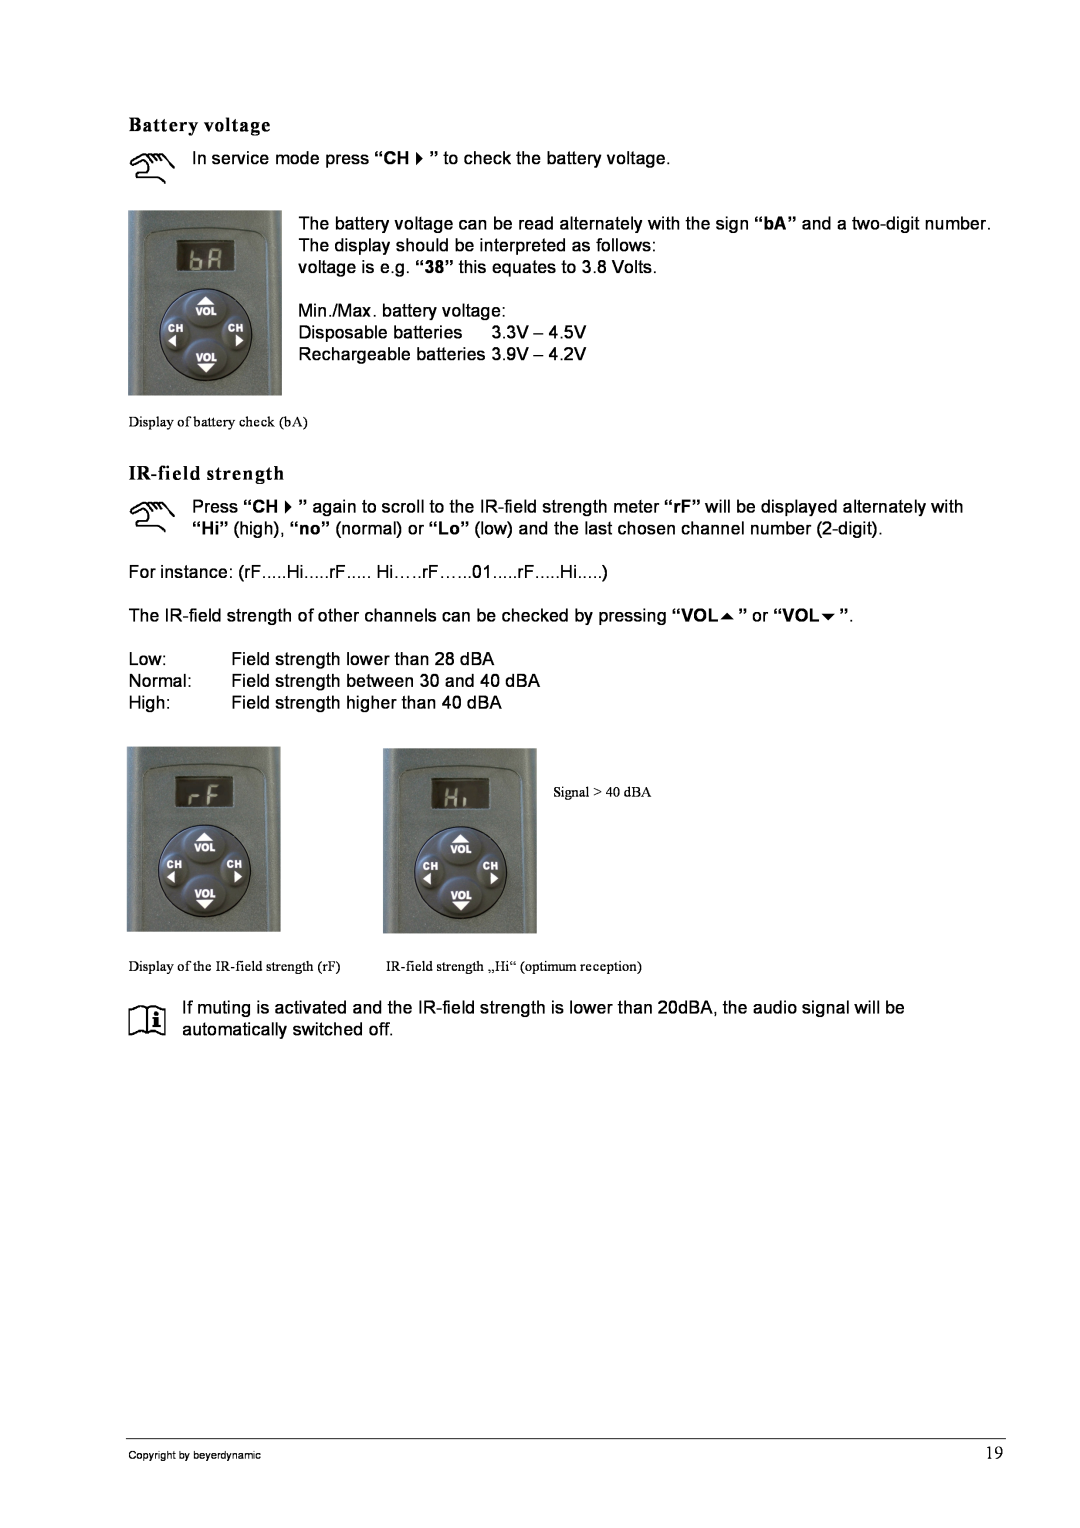 Beyerdynamic SIR 320 operating instructions Battery voltage, IR-fieldstrength 